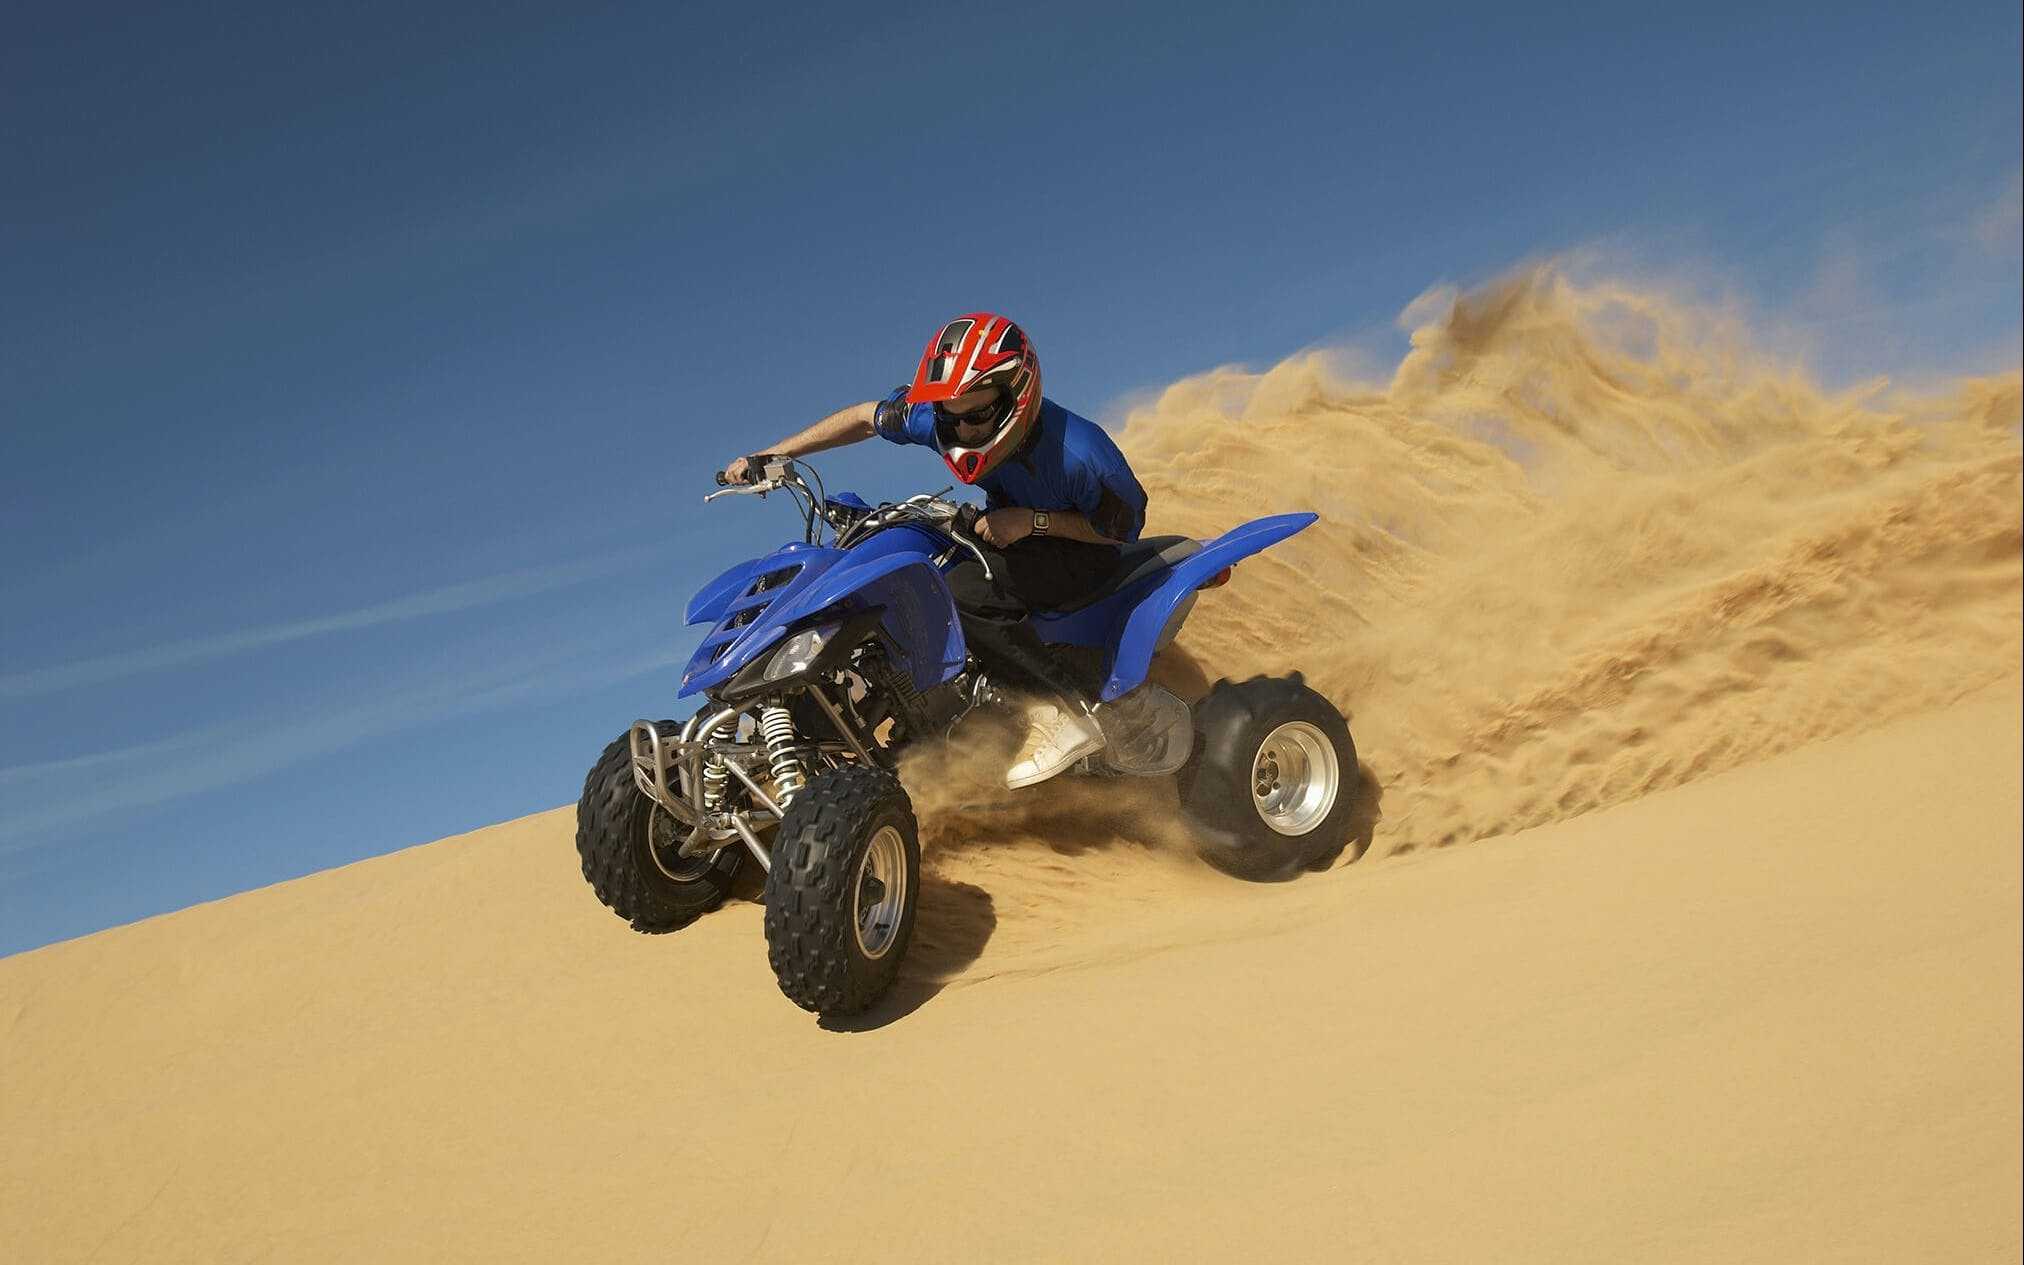 Desert Safari Dubai with ATV Quad Bike Ride